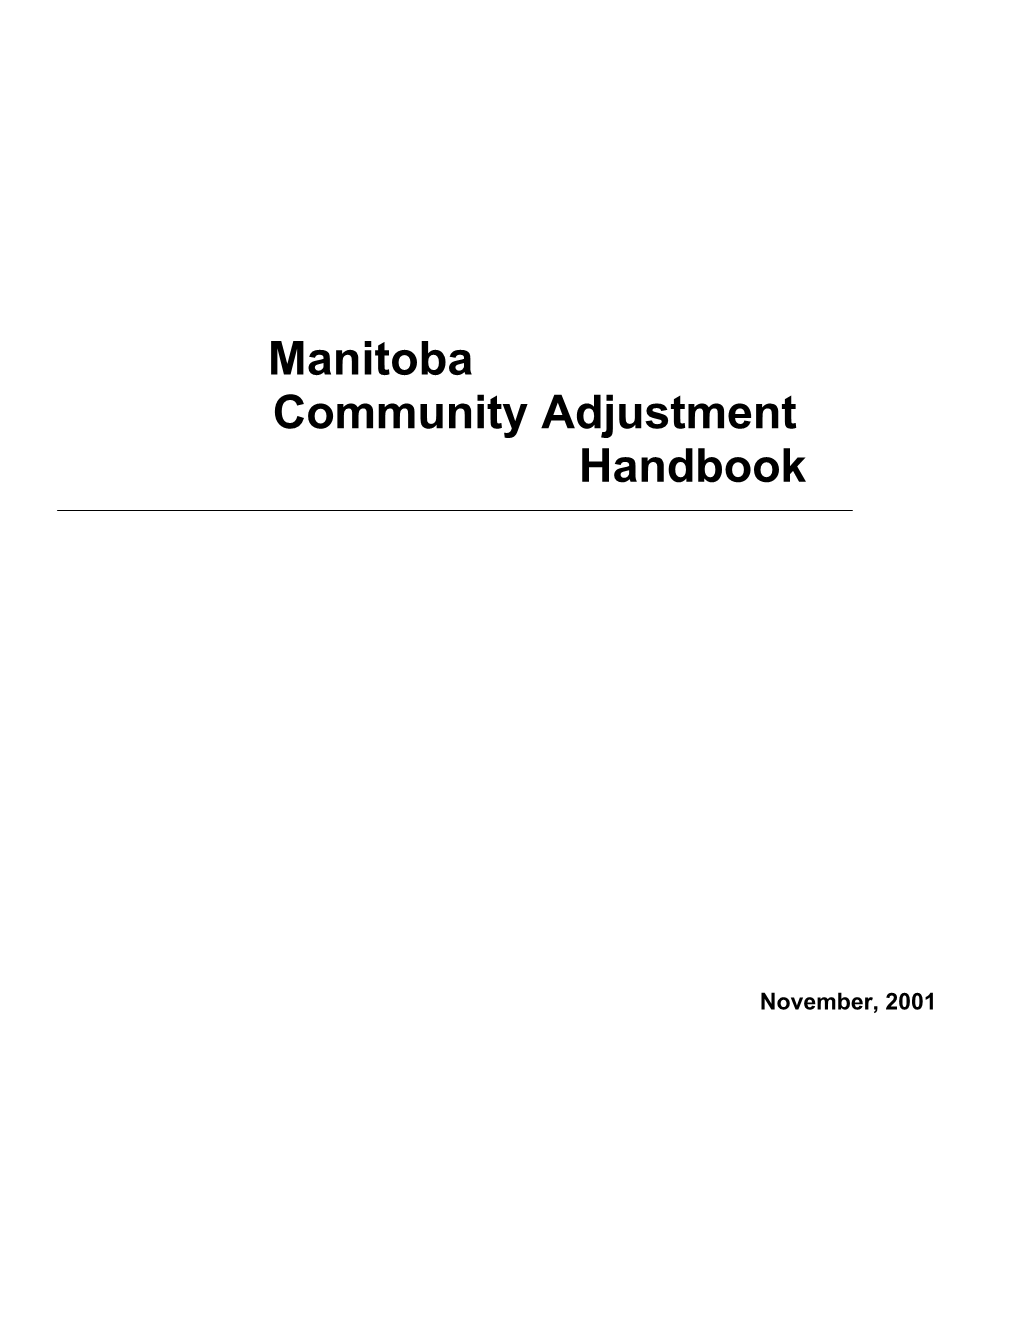 Manitoba Community Adjustment Handbook